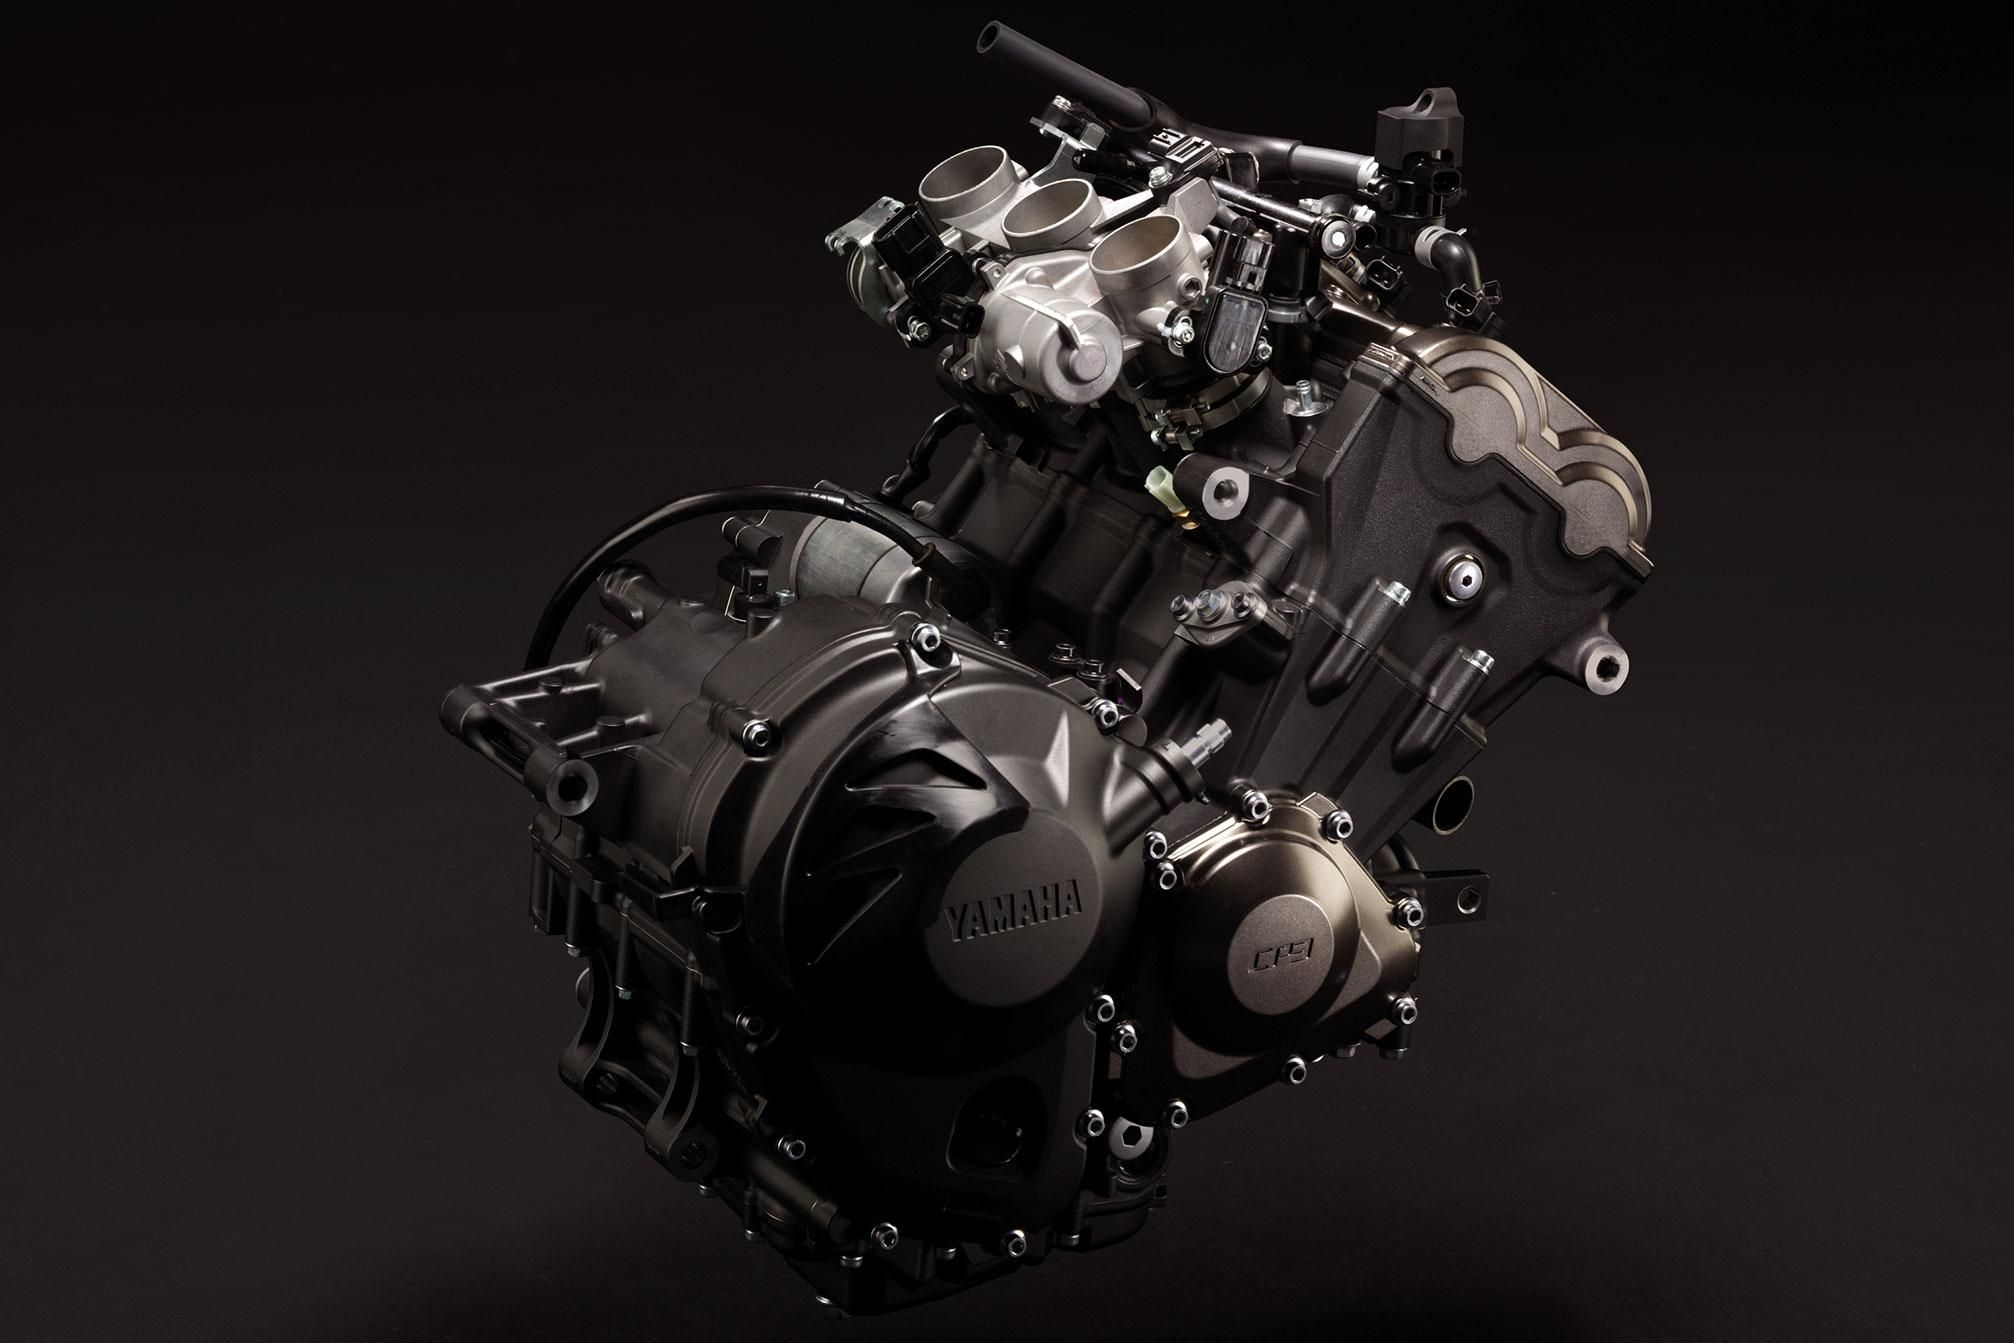 HD 2014 Yamaha Fz 09 Bike Motorbike Engine Engines Free Desktop